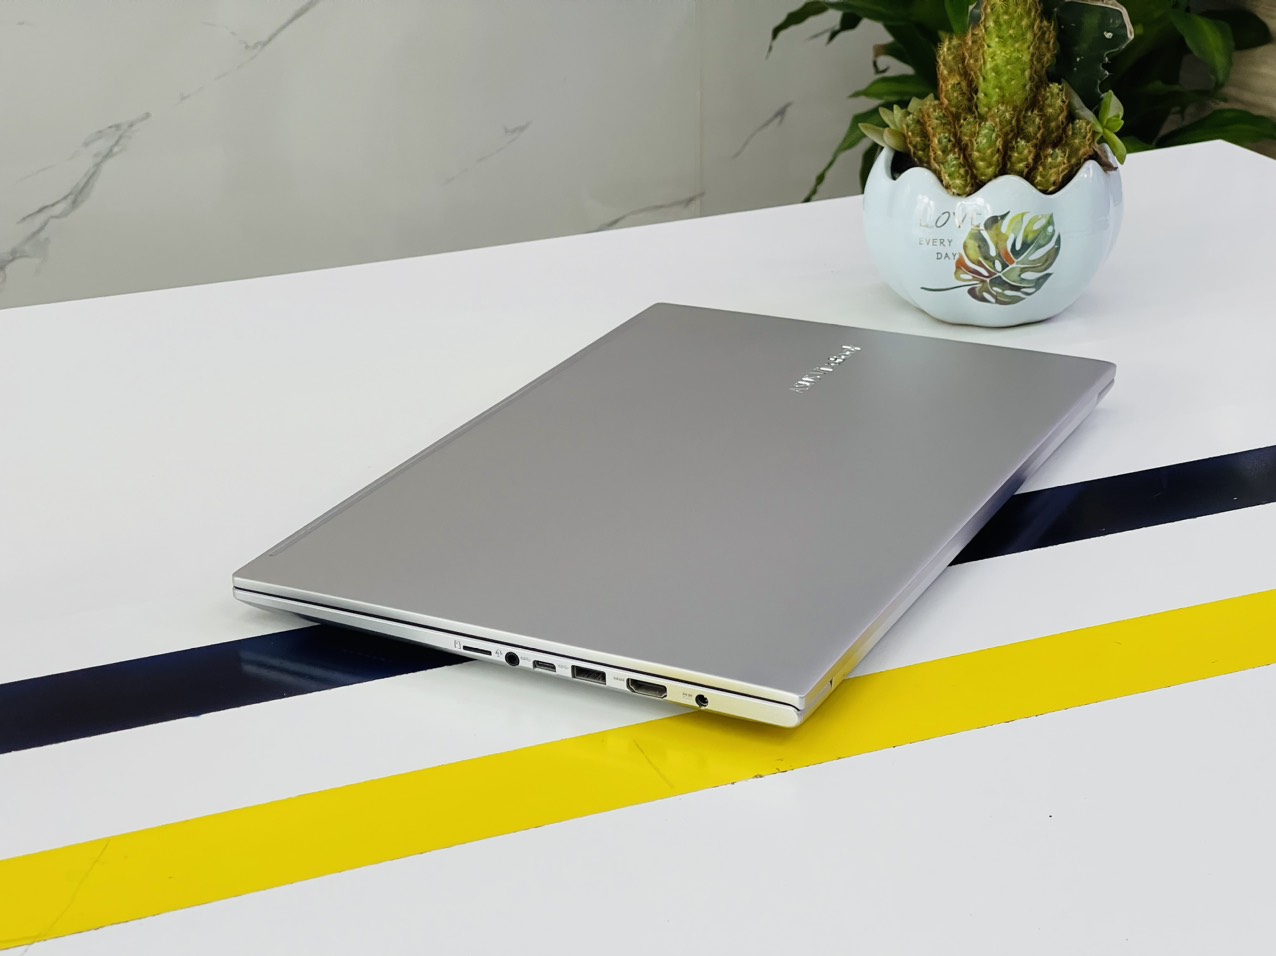 Asus Vivobook A515E (2021) i5-1135G7 RAM 8G SSD 512G Nvidia MX330 15.6" FHD New 99%